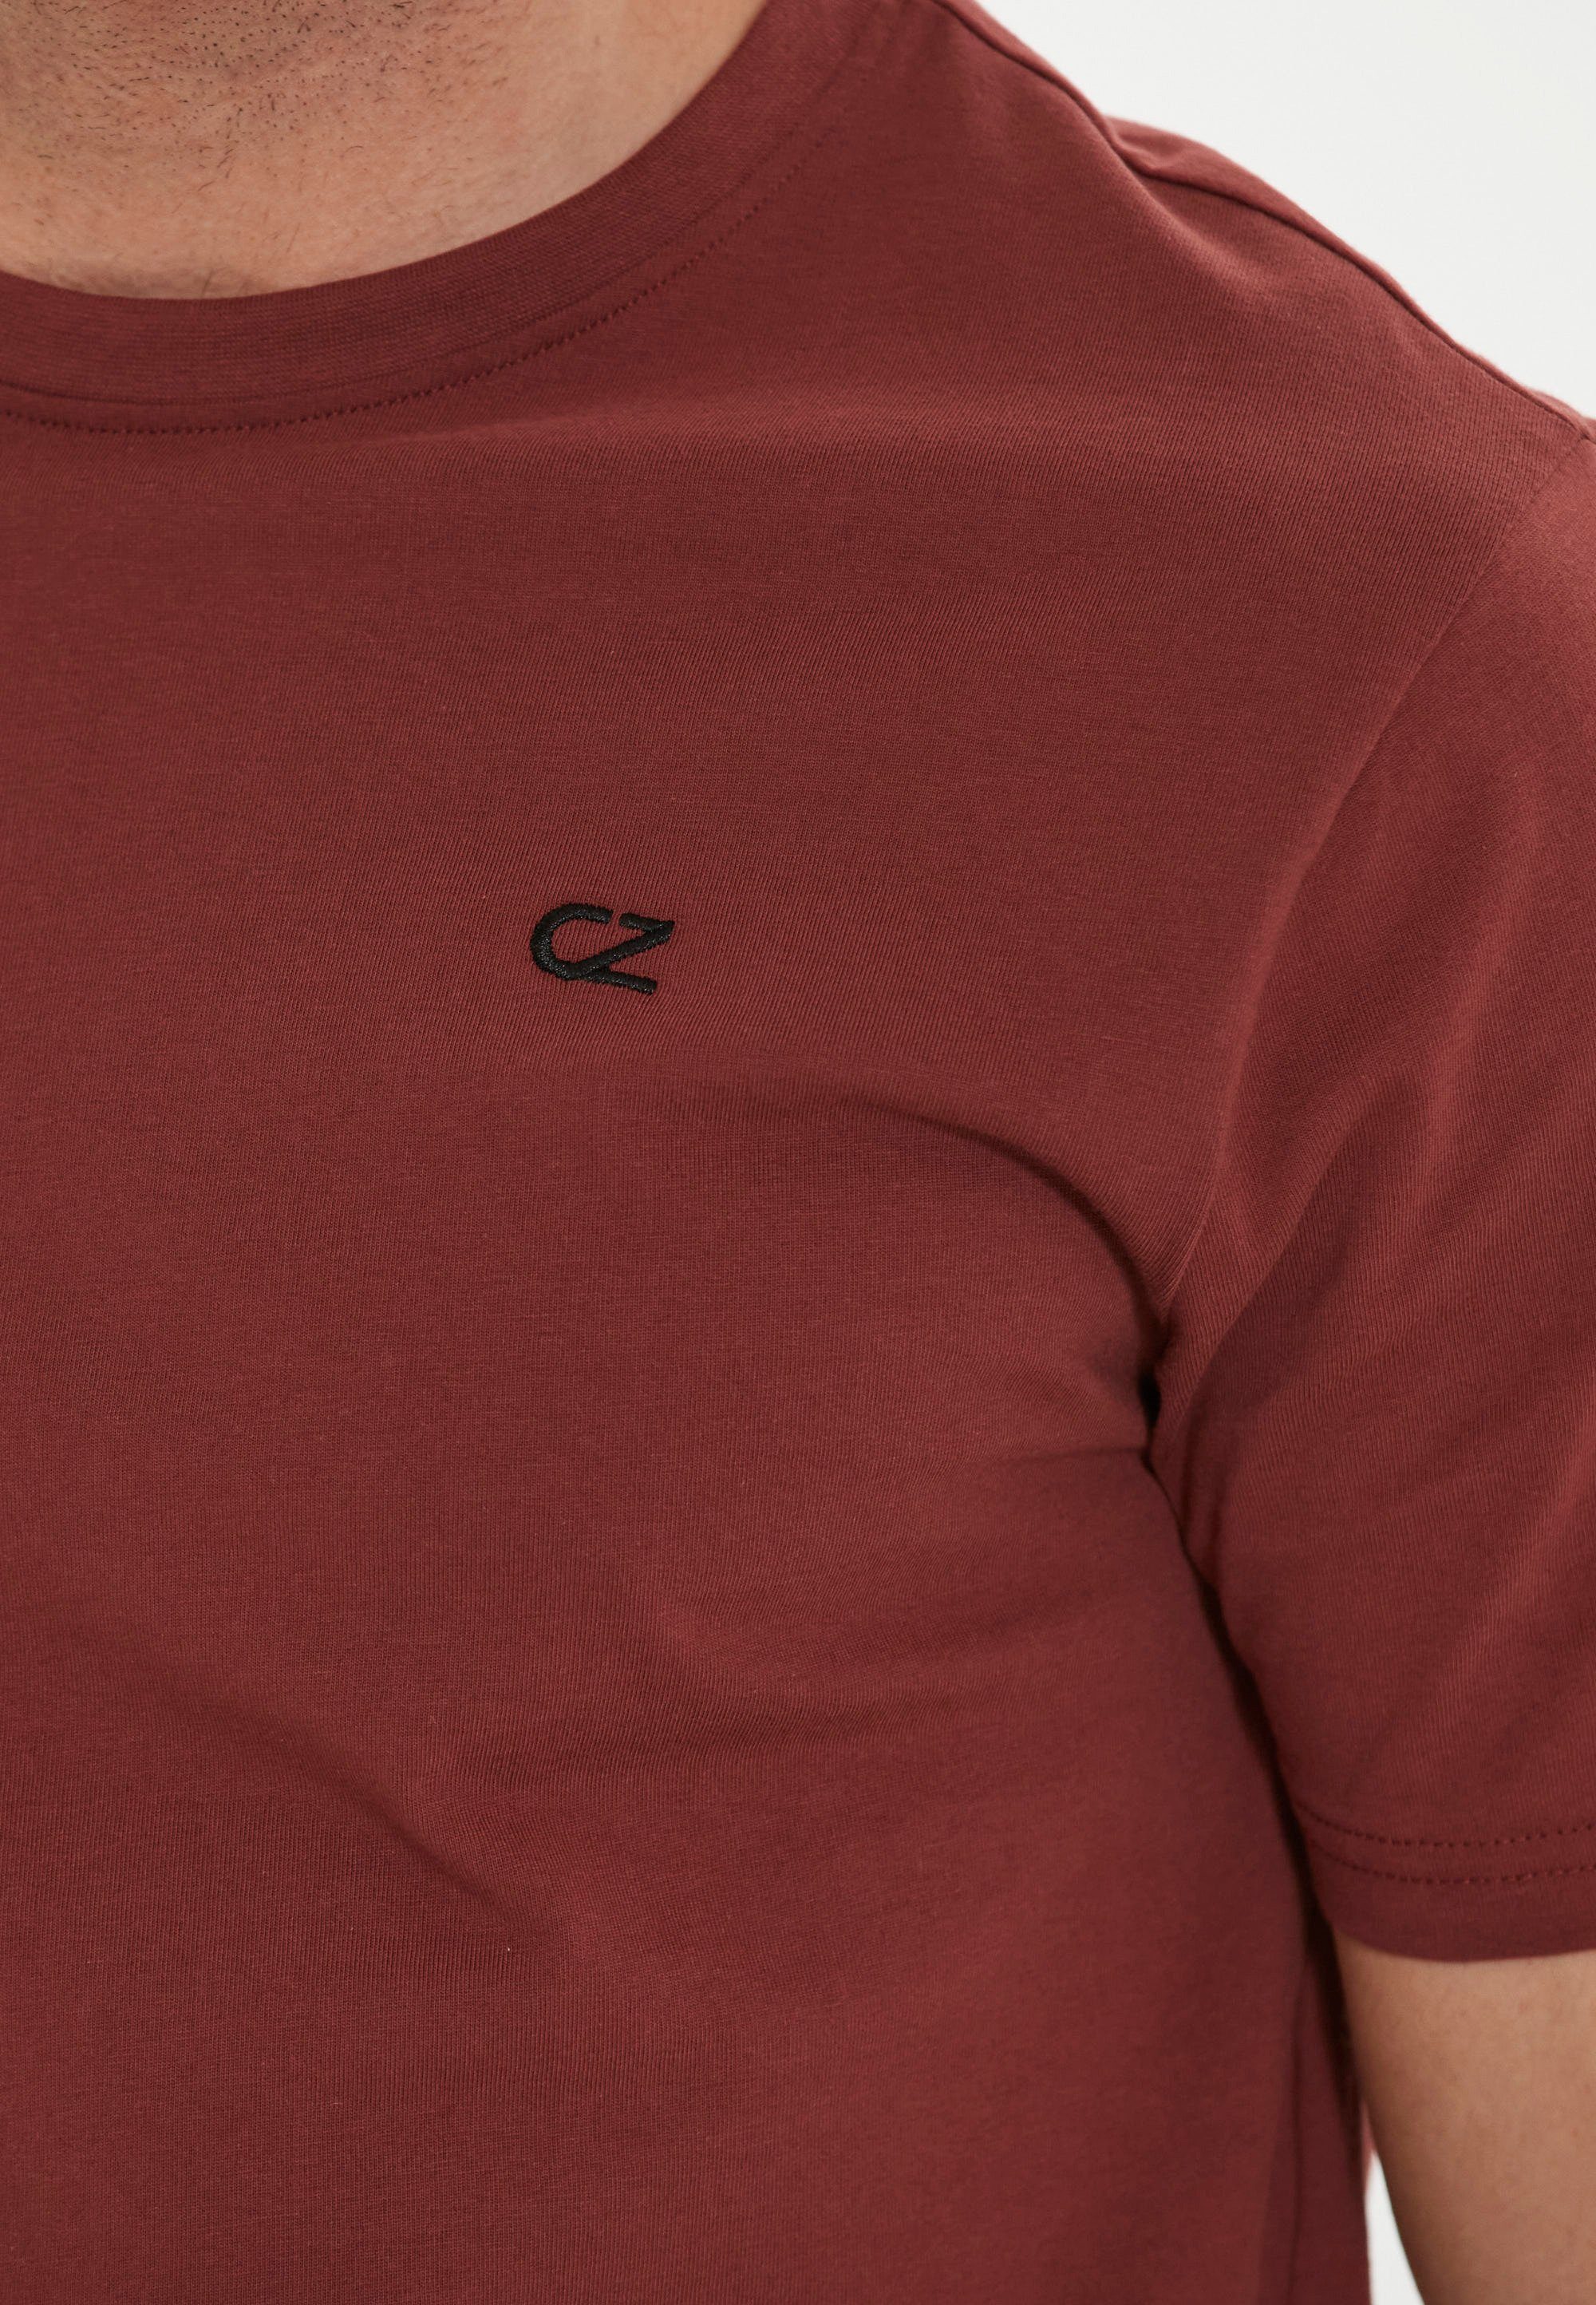 karamell CRUZ Baumwolle Highmore aus reiner T-Shirt